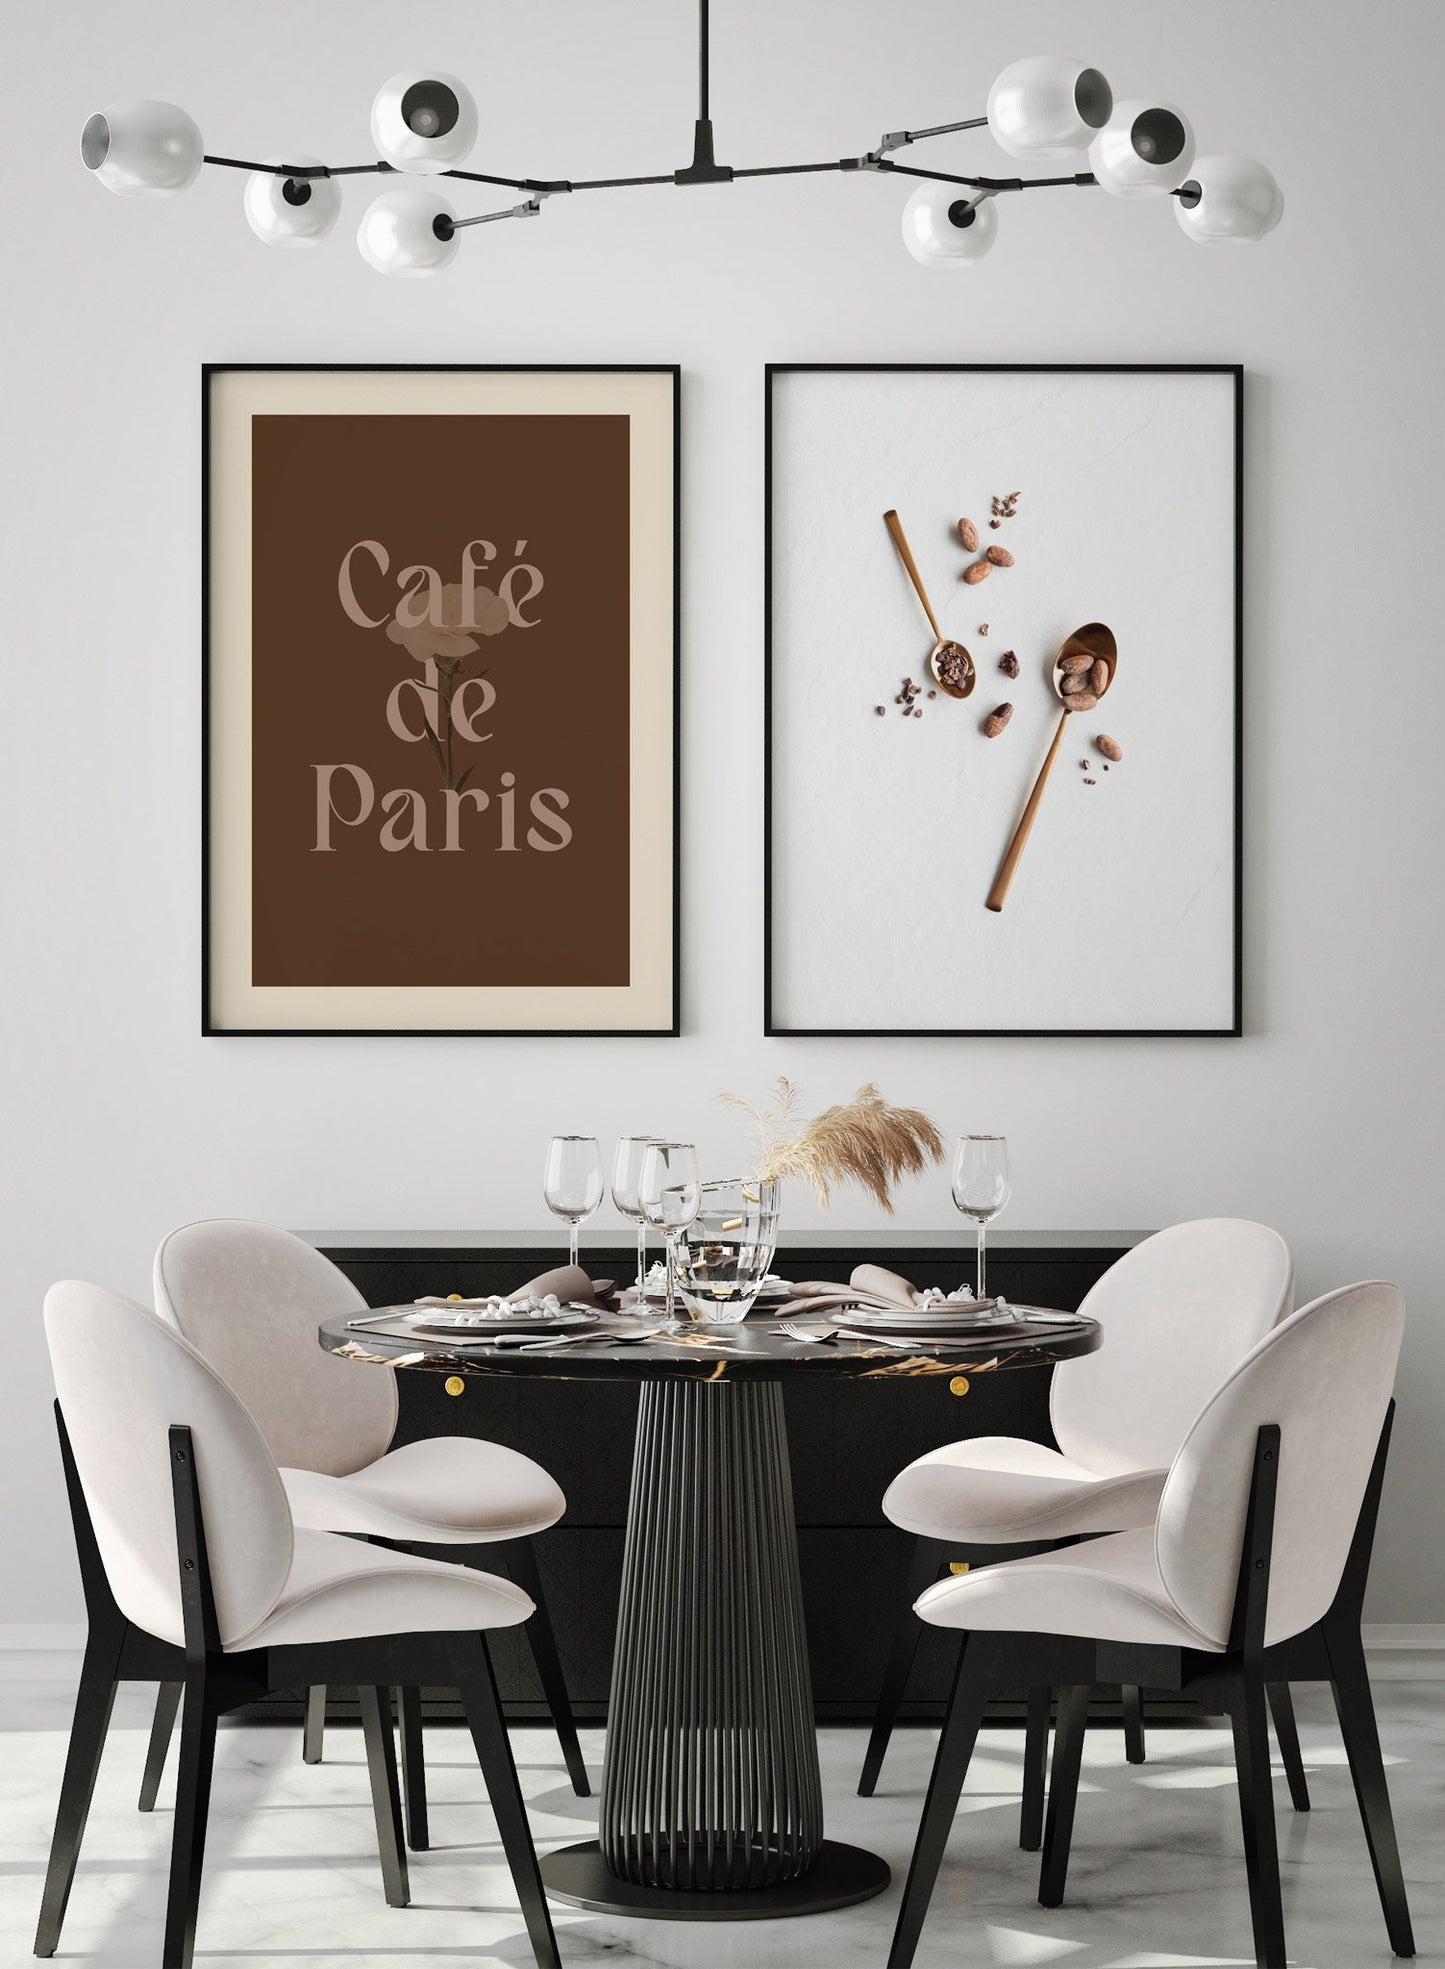 "Café de Paris" is a minimalist beige and brown typography poster by Opposite Wall of the words ‘café de Paris’ over a beige background. 